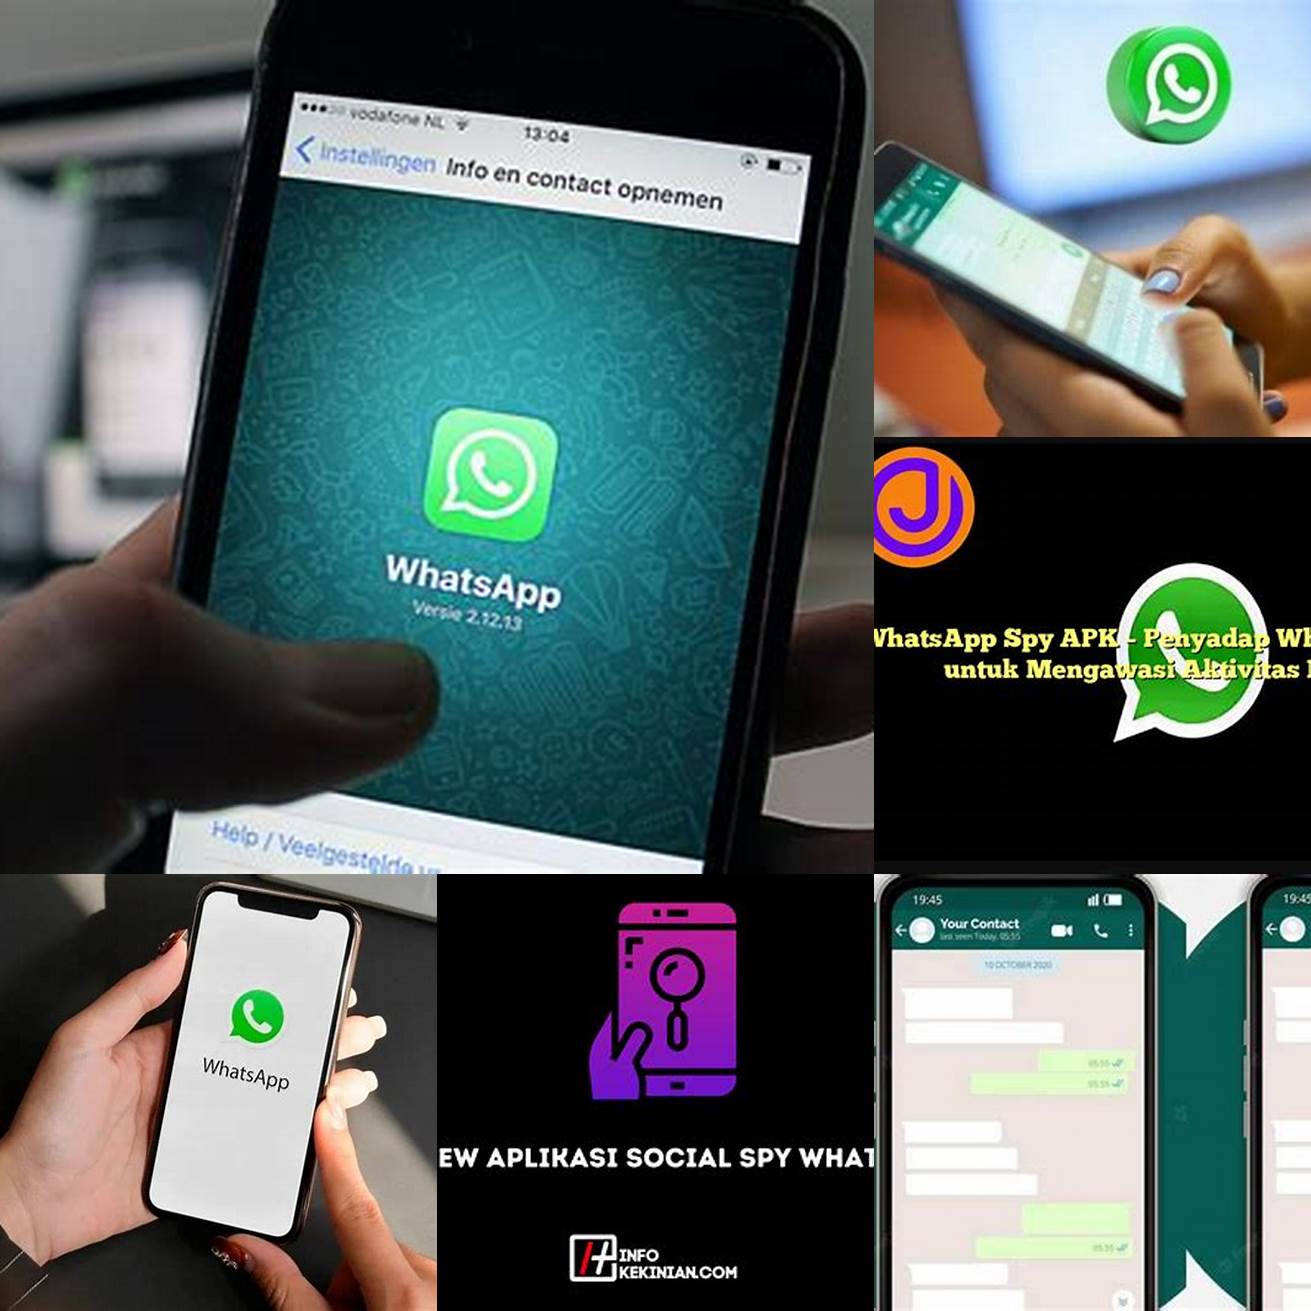 Spy Whatsapp Chat Apk dapat digunakan untuk memantau pasangan